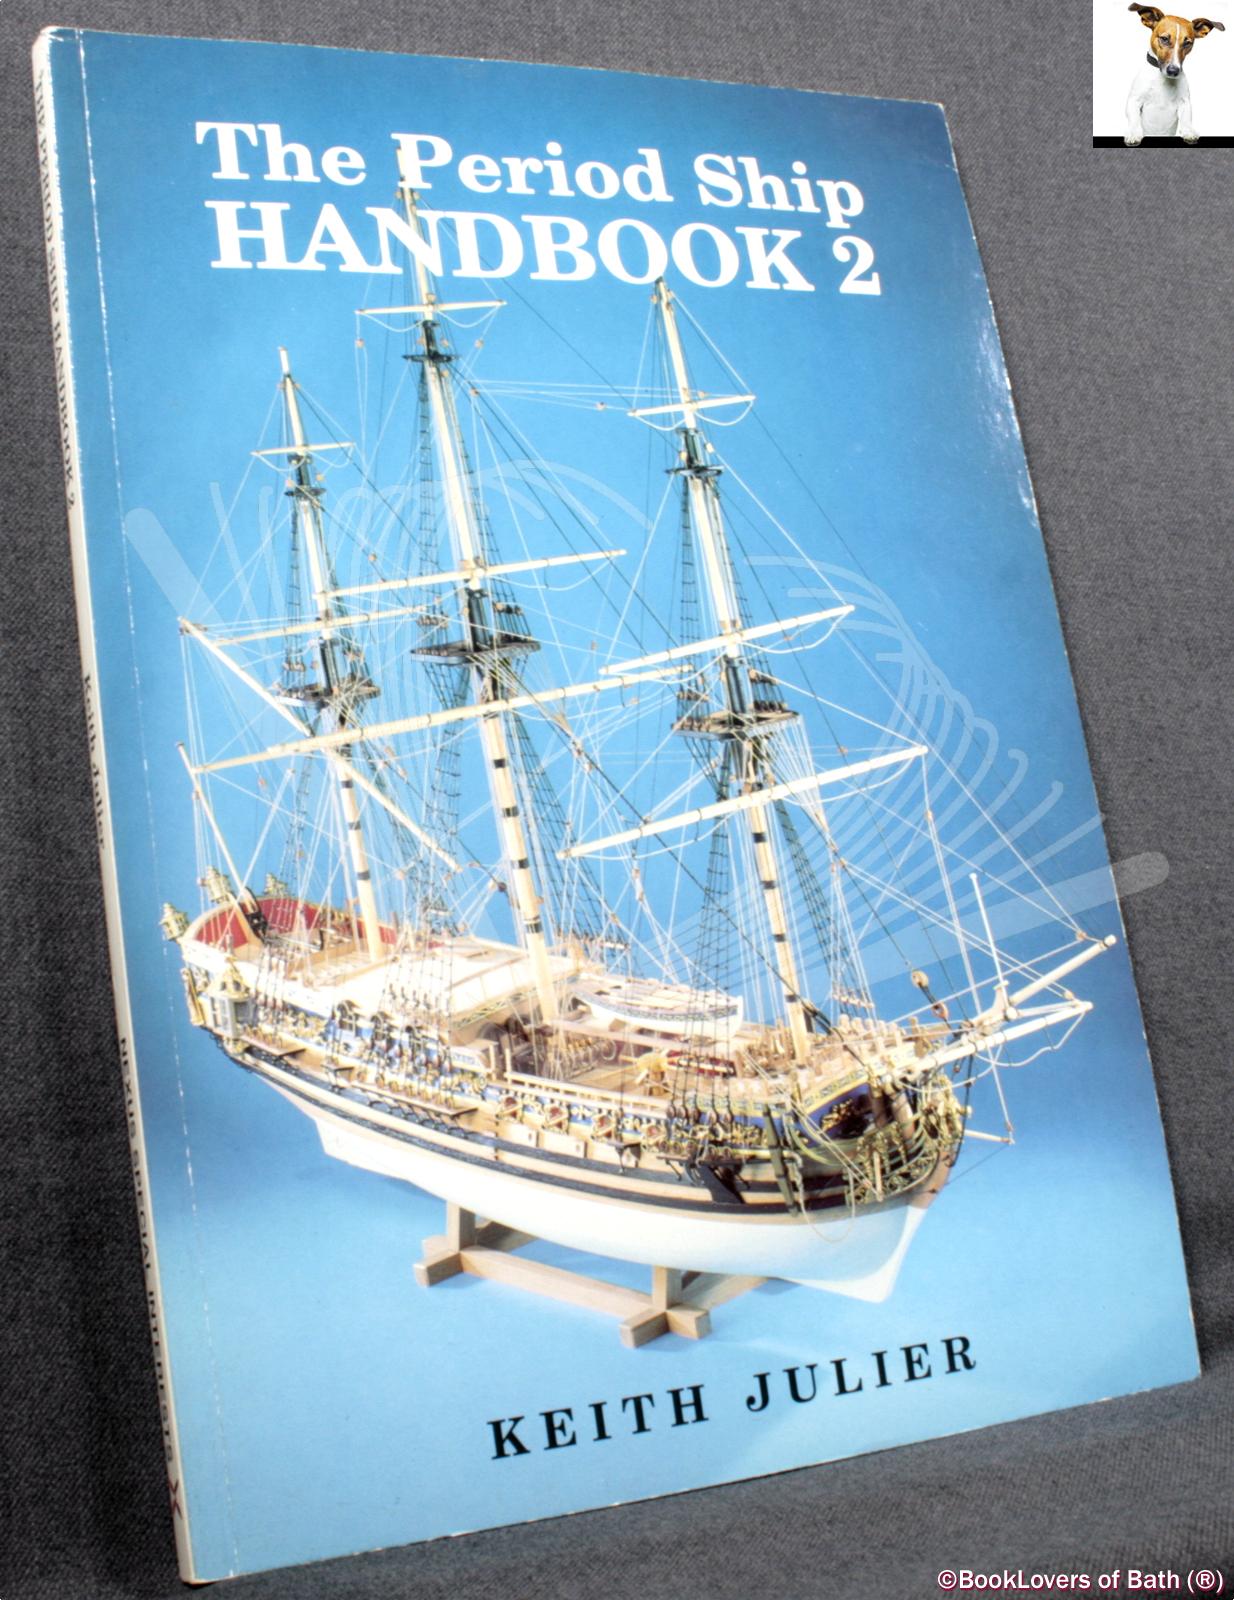 The Period Ship Handbook 2 - Keith Julier